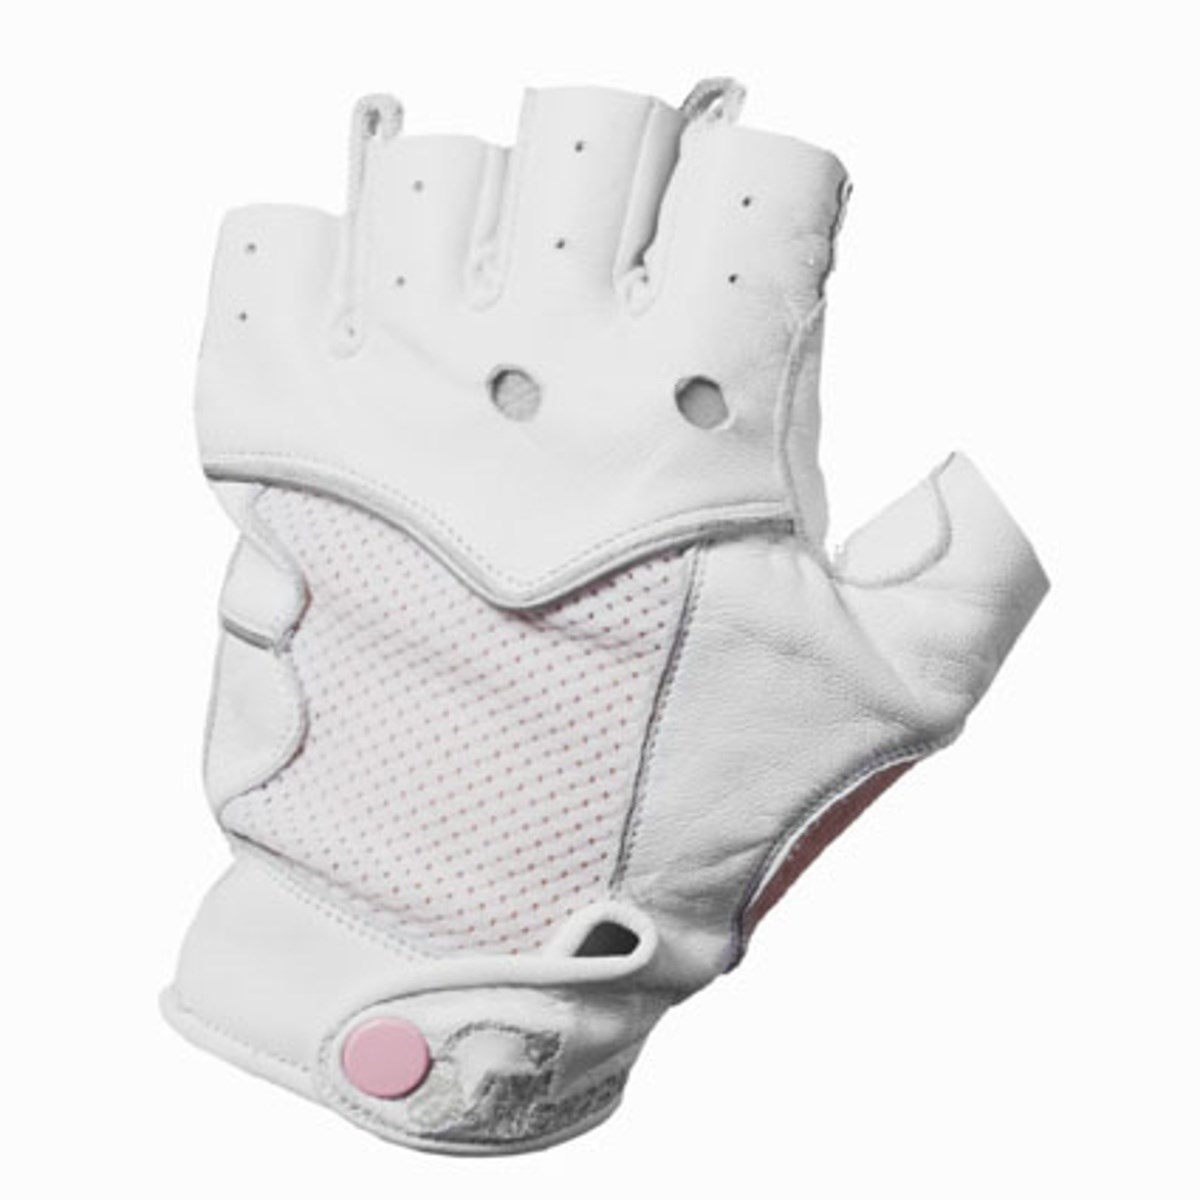 Ana Nichoola Kestrel Glove product image